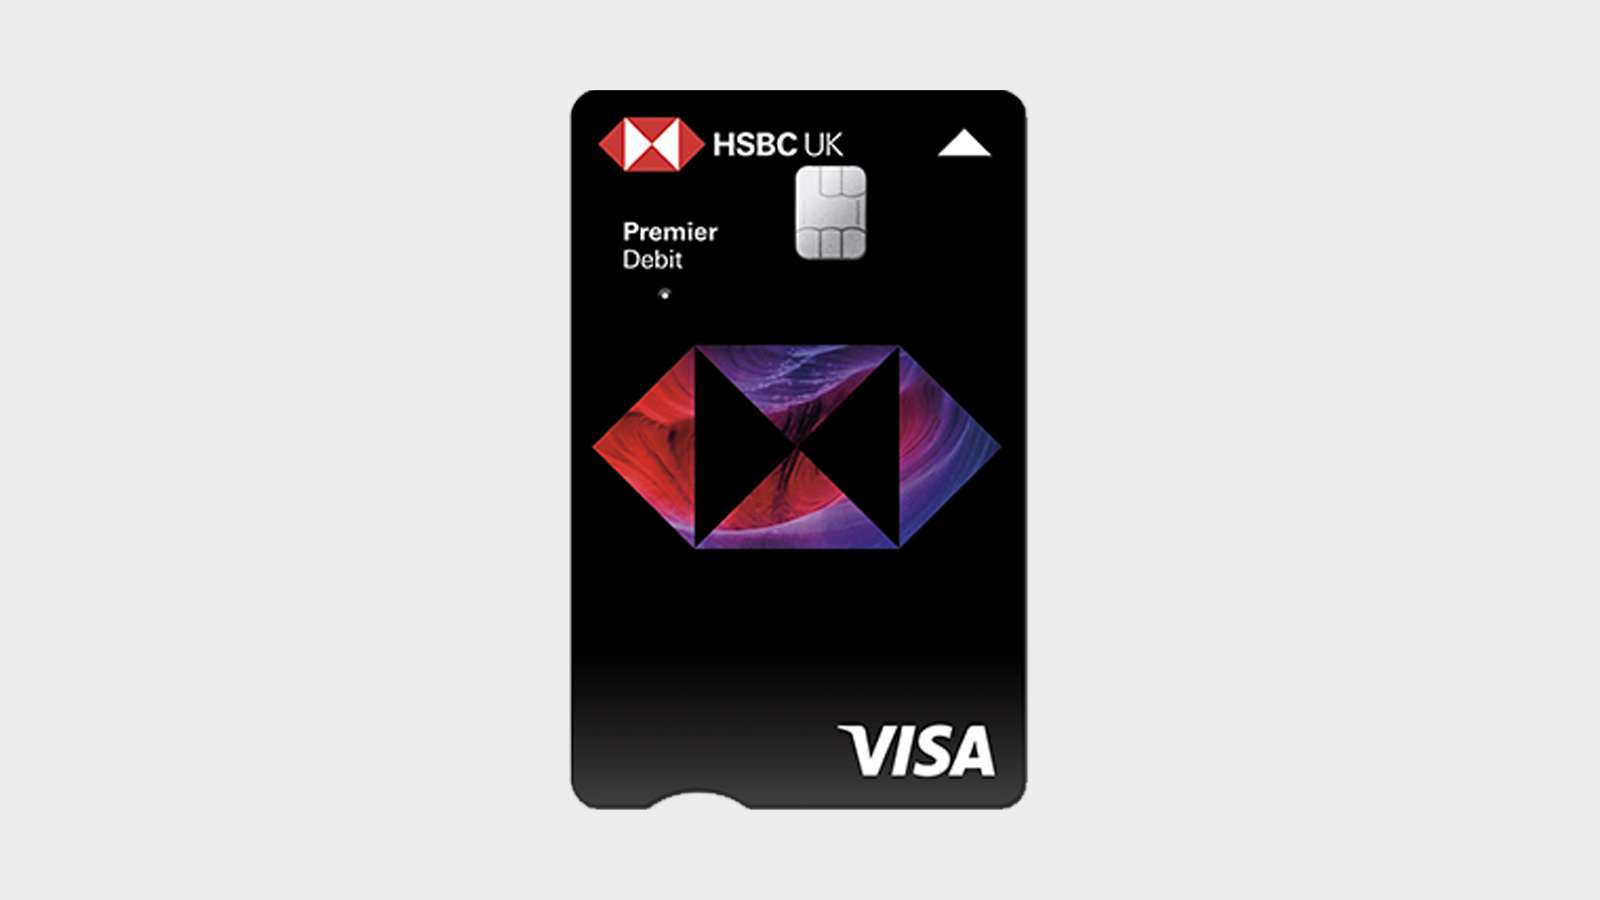 HSBC UK Premier Debit card image